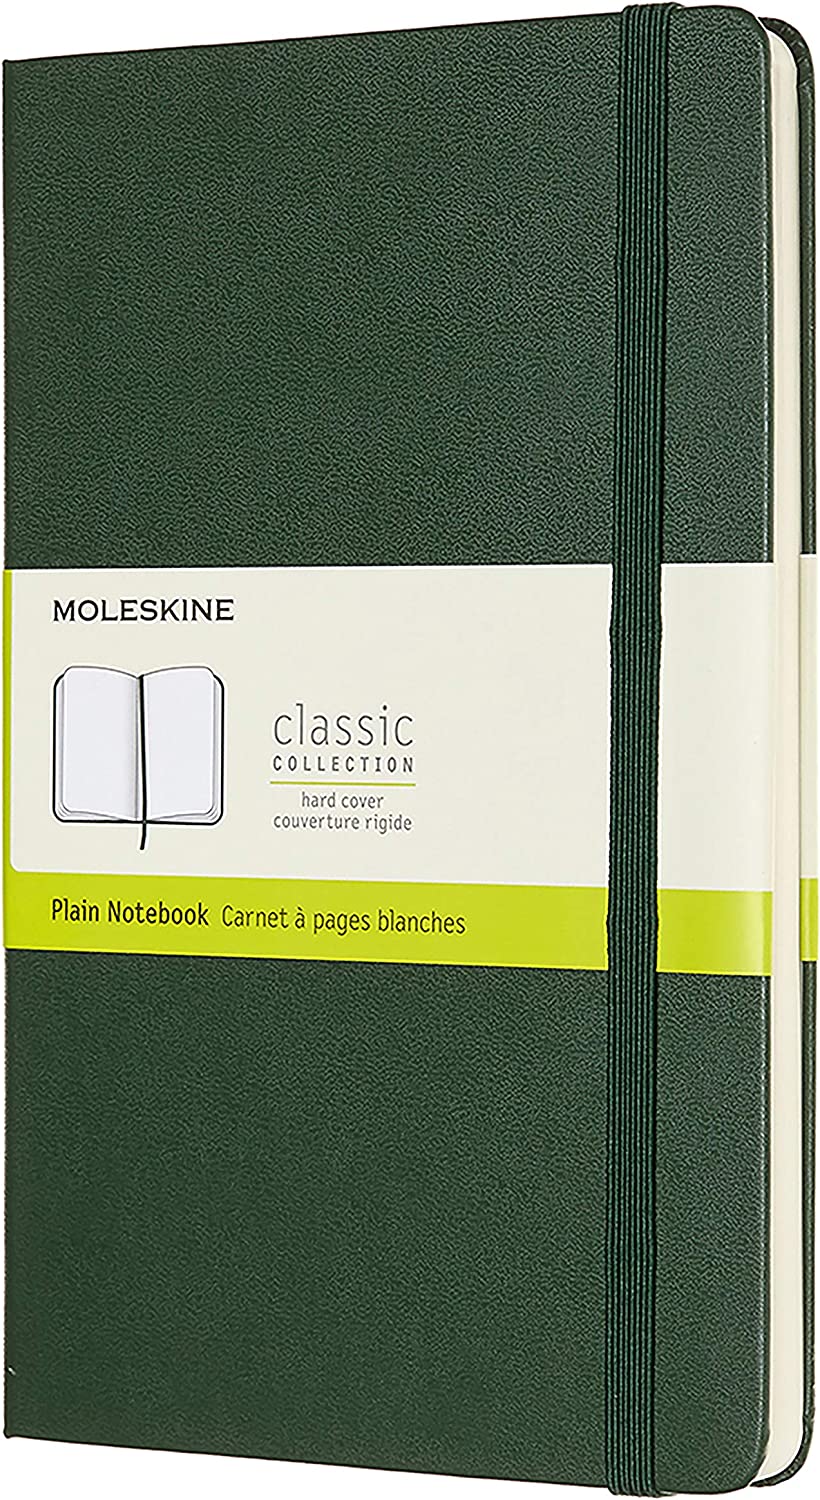 Moleskine Papir Pocket / Myrtle Green / Hardcover Moleskine Classic notesbog - Plain